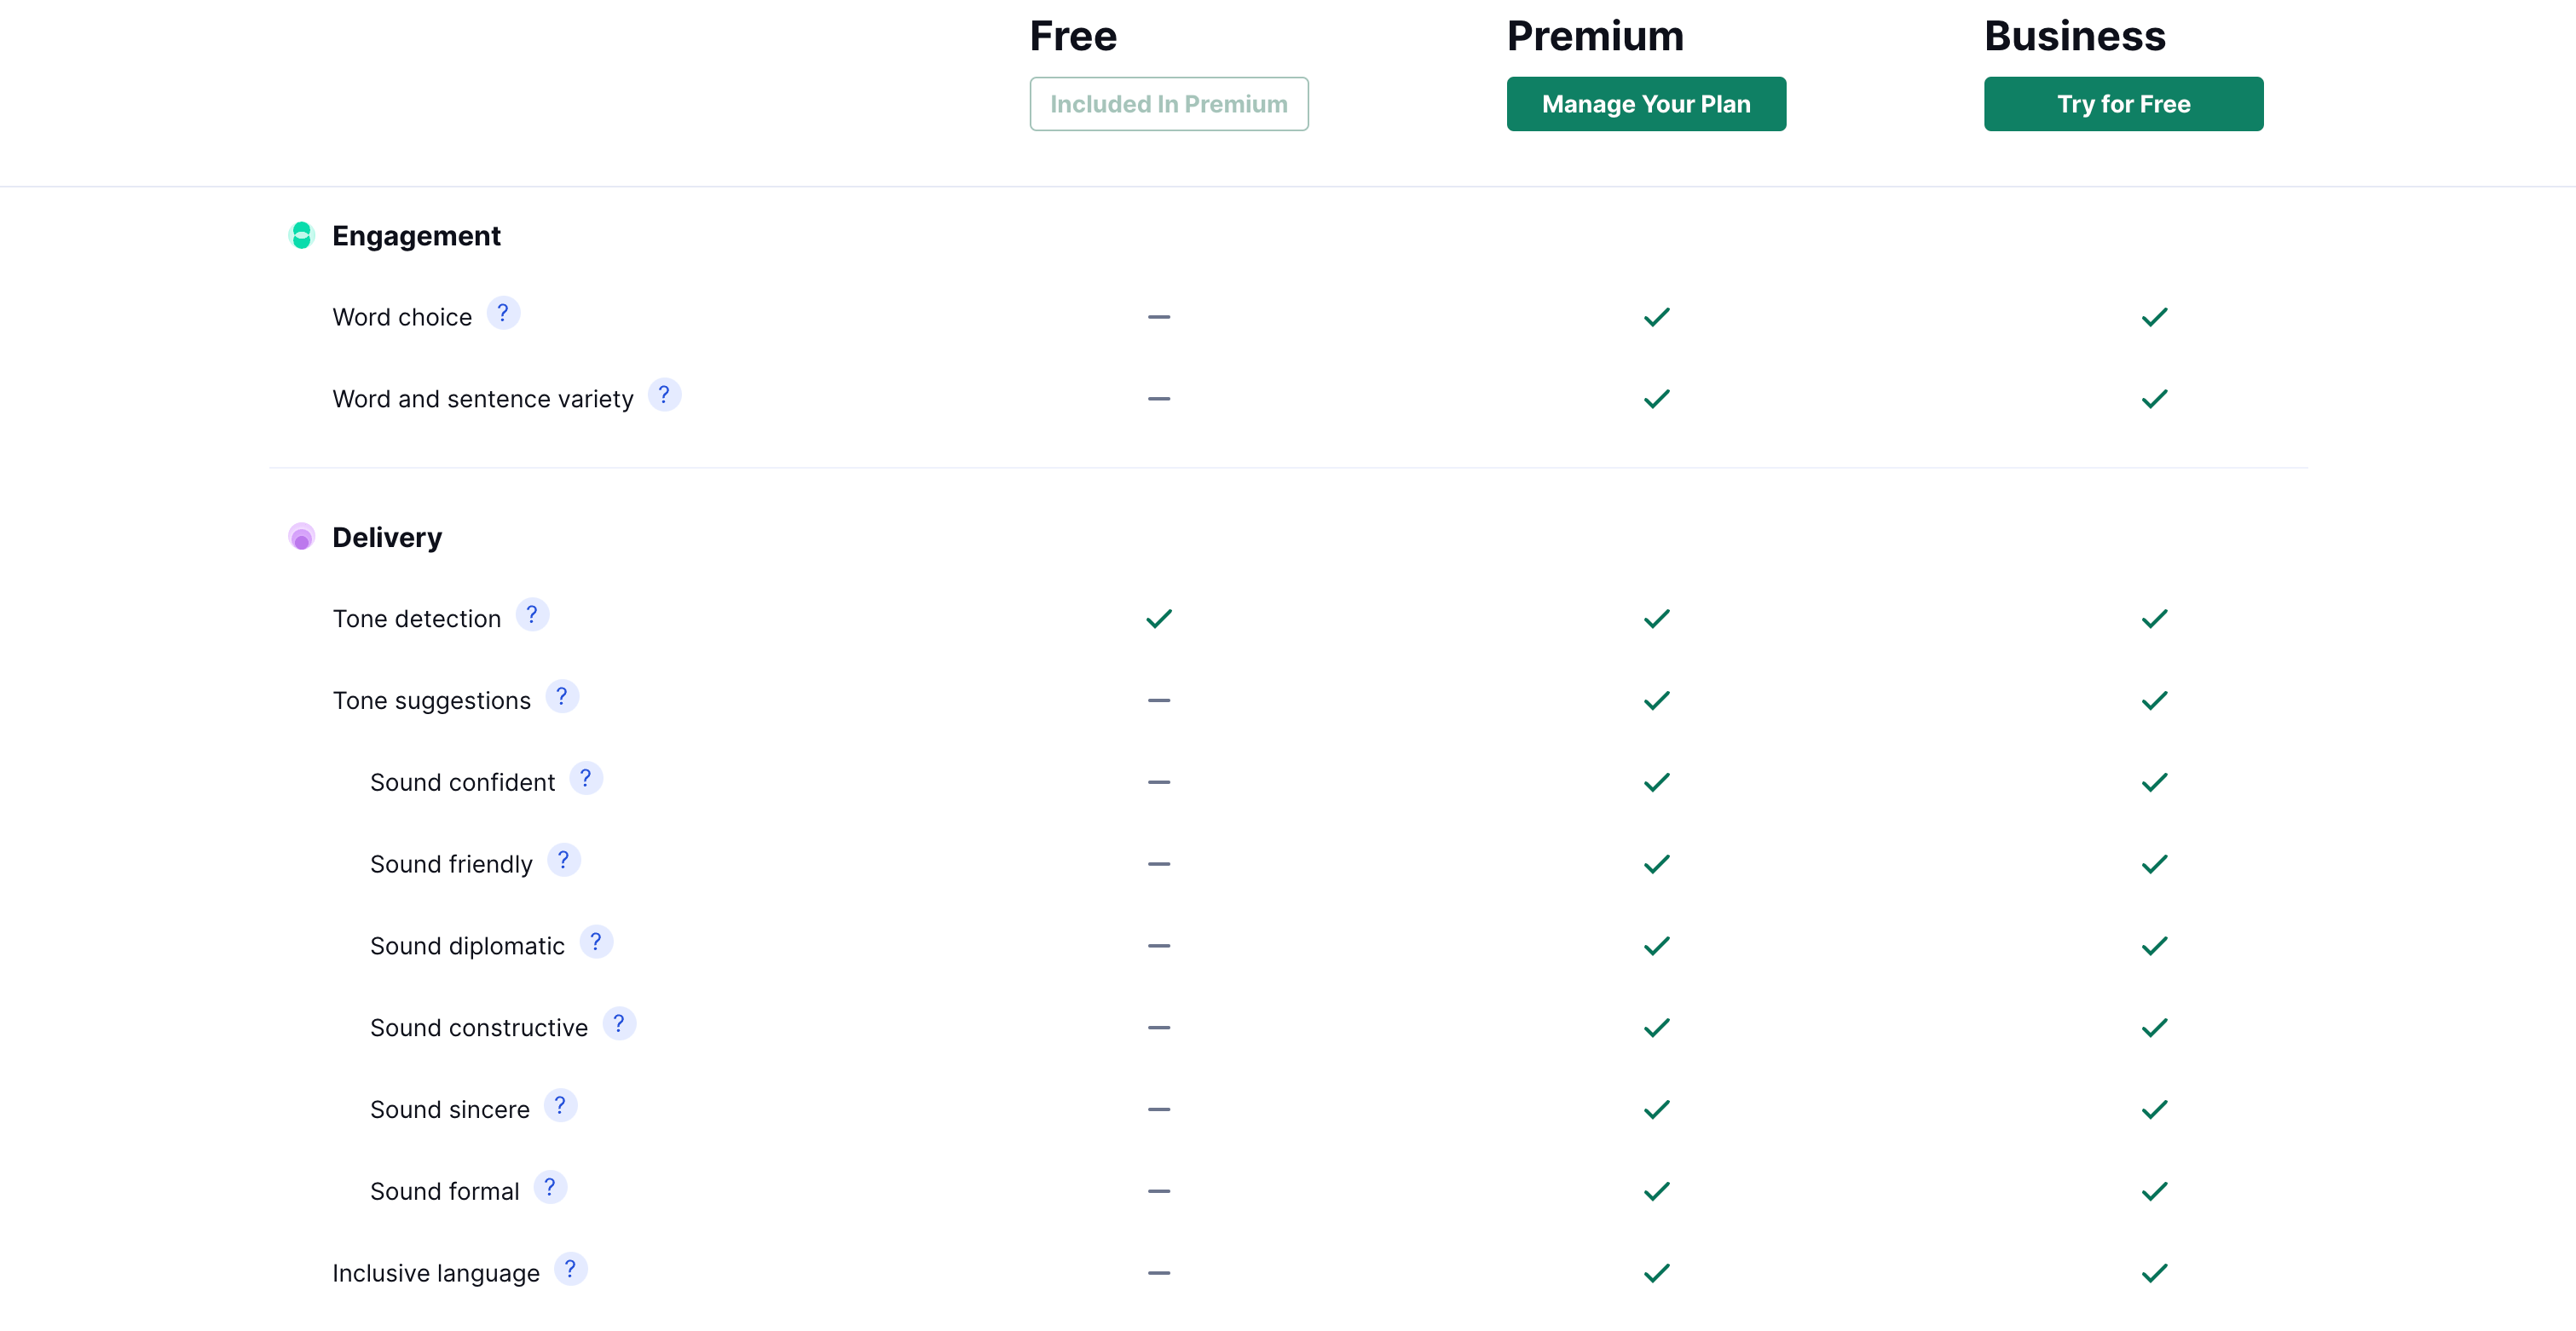 grammarly free vs premium, grammarly premium, grammarly premium vs free